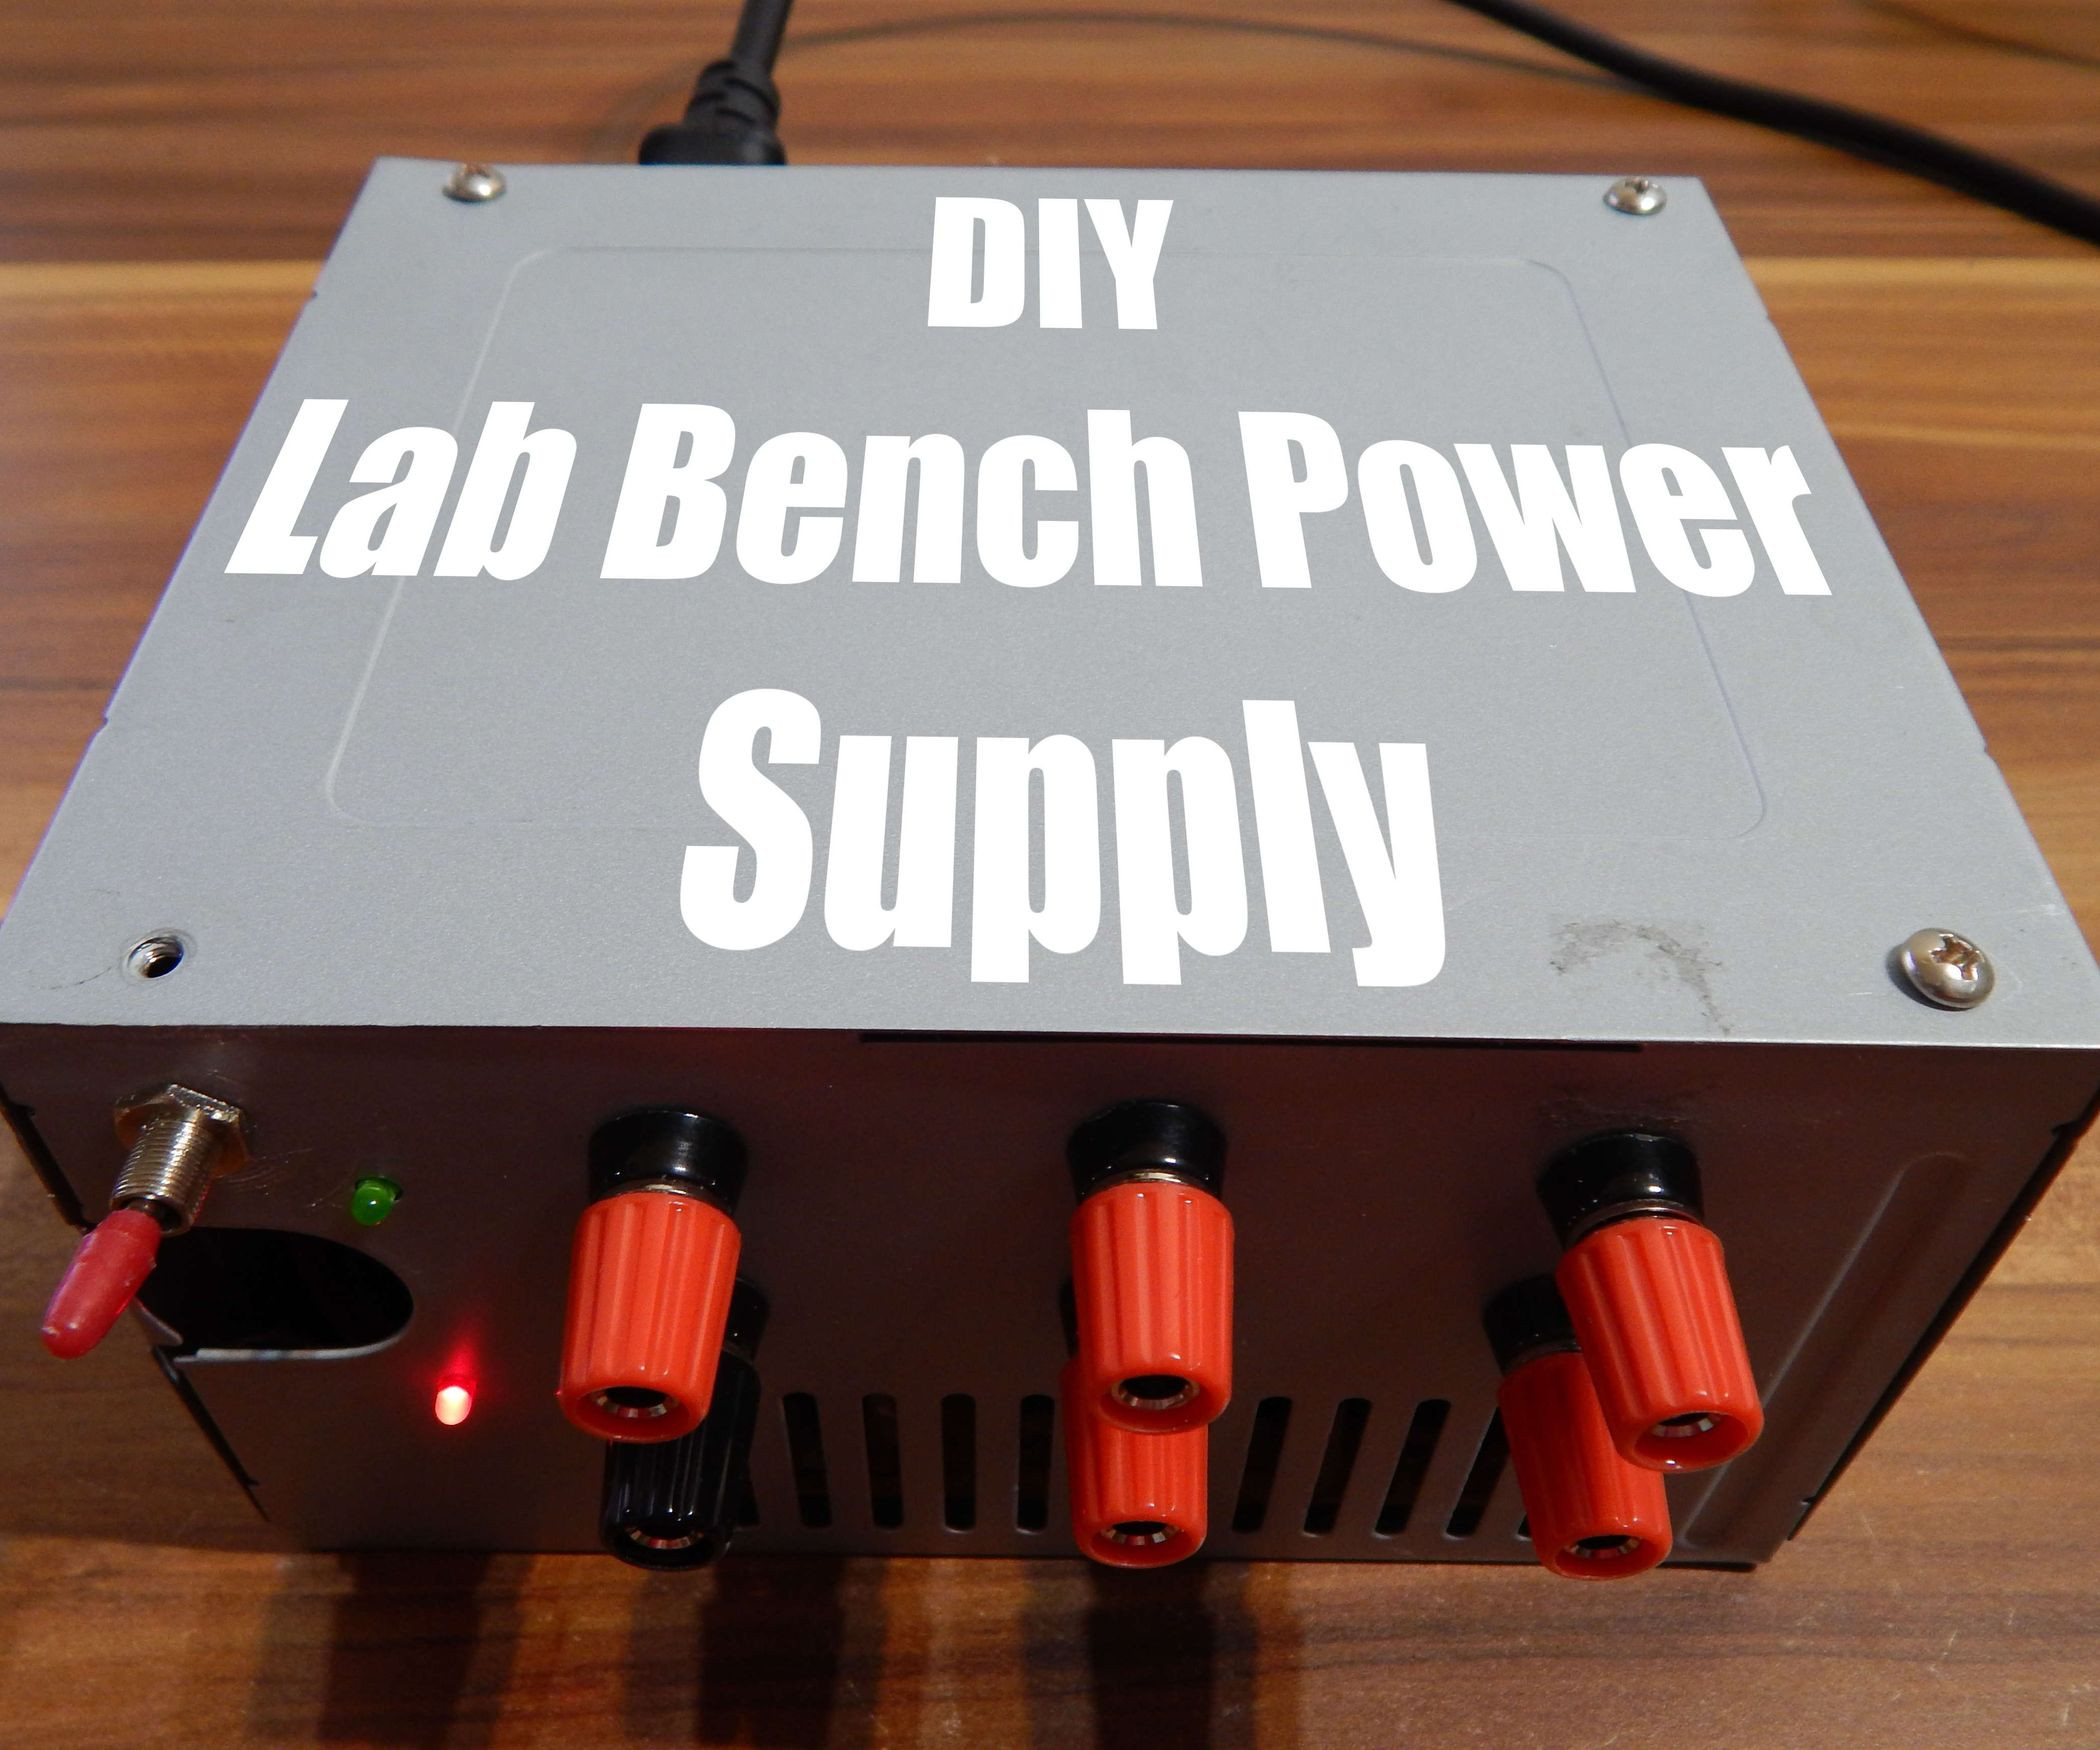 DIY Bench Power Supply Kit
 DIY Lab Bench Power Supply